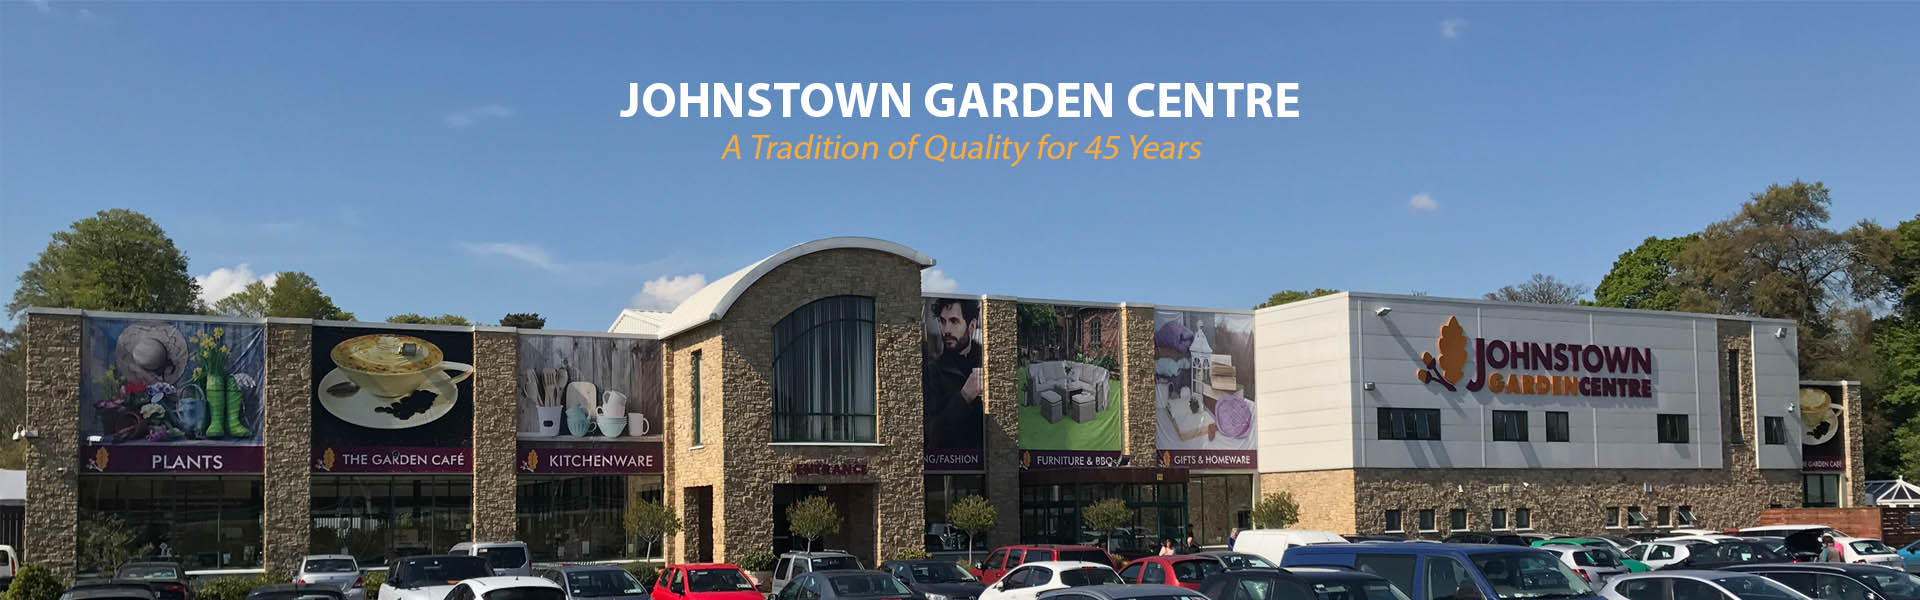 Johnstown Garden Centre Shop Online Or Buy In Store